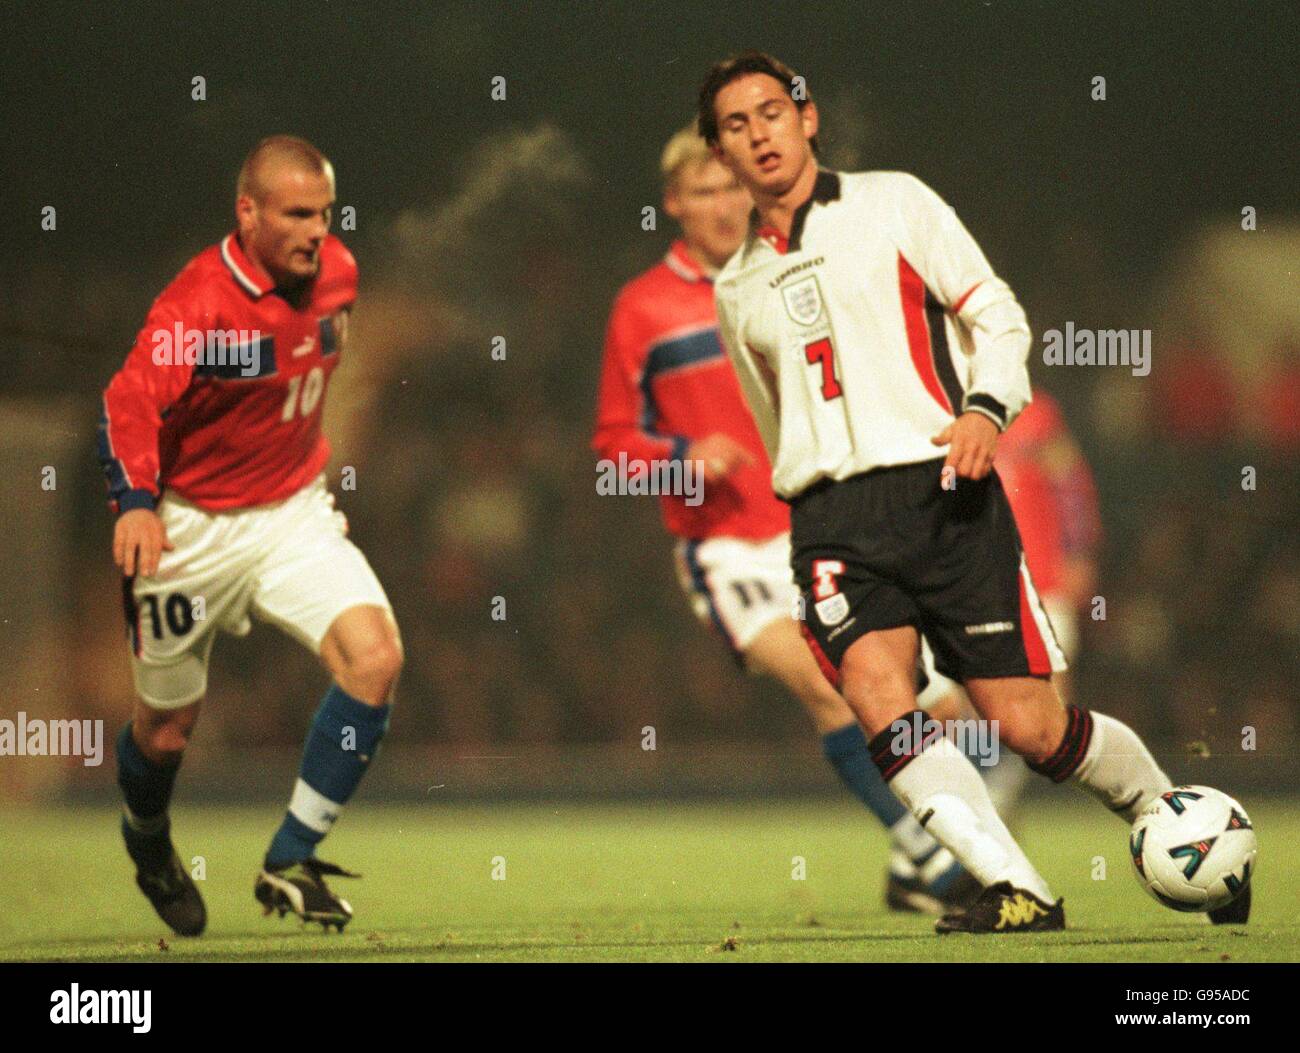 Fußball - unter 21 Jahren freundlich - England gegen Tschechien. Der englische Frank Lampard (rechts) legt den Ball ab, während Tomas Dosek (links) der Tschechischen Republik aufschaut Stockfoto